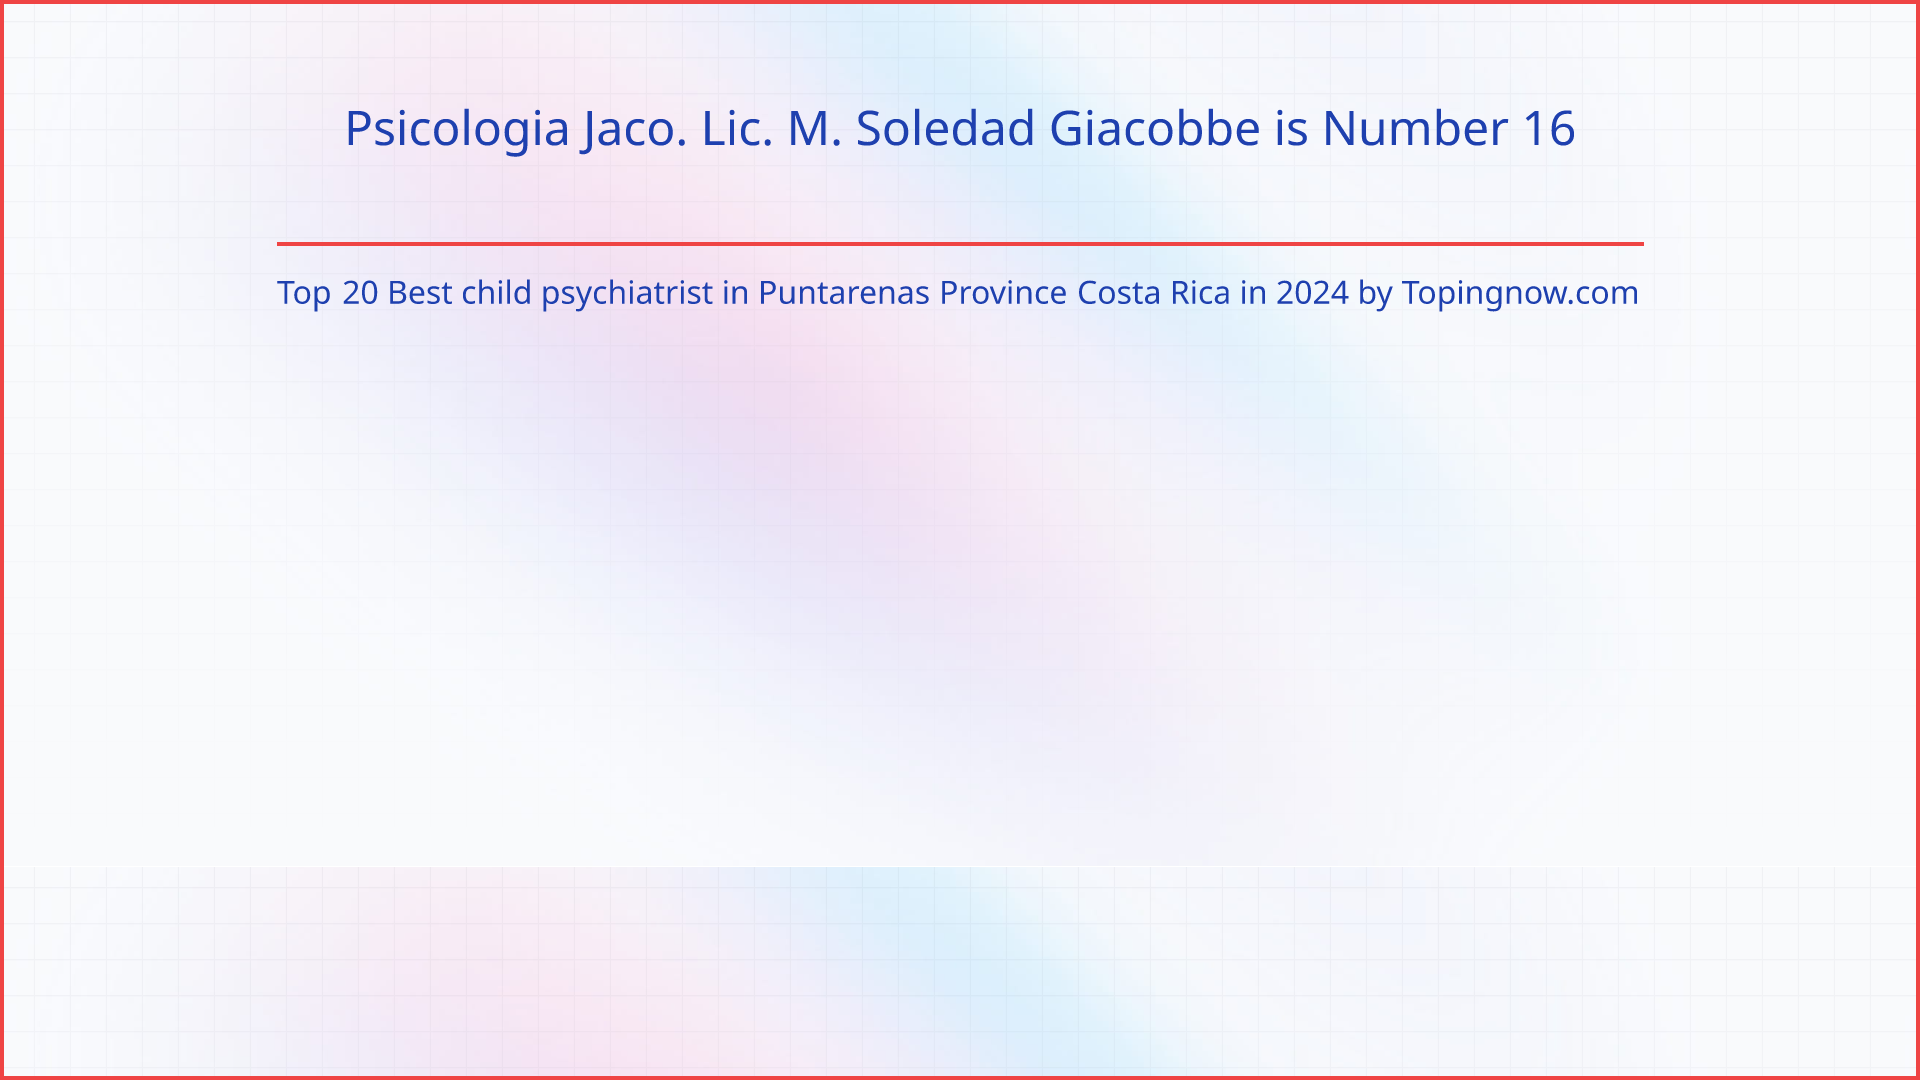 Psicologia Jaco. Lic. M. Soledad Giacobbe: Top 20 Best child psychiatrist in Puntarenas Province Costa Rica in 2024